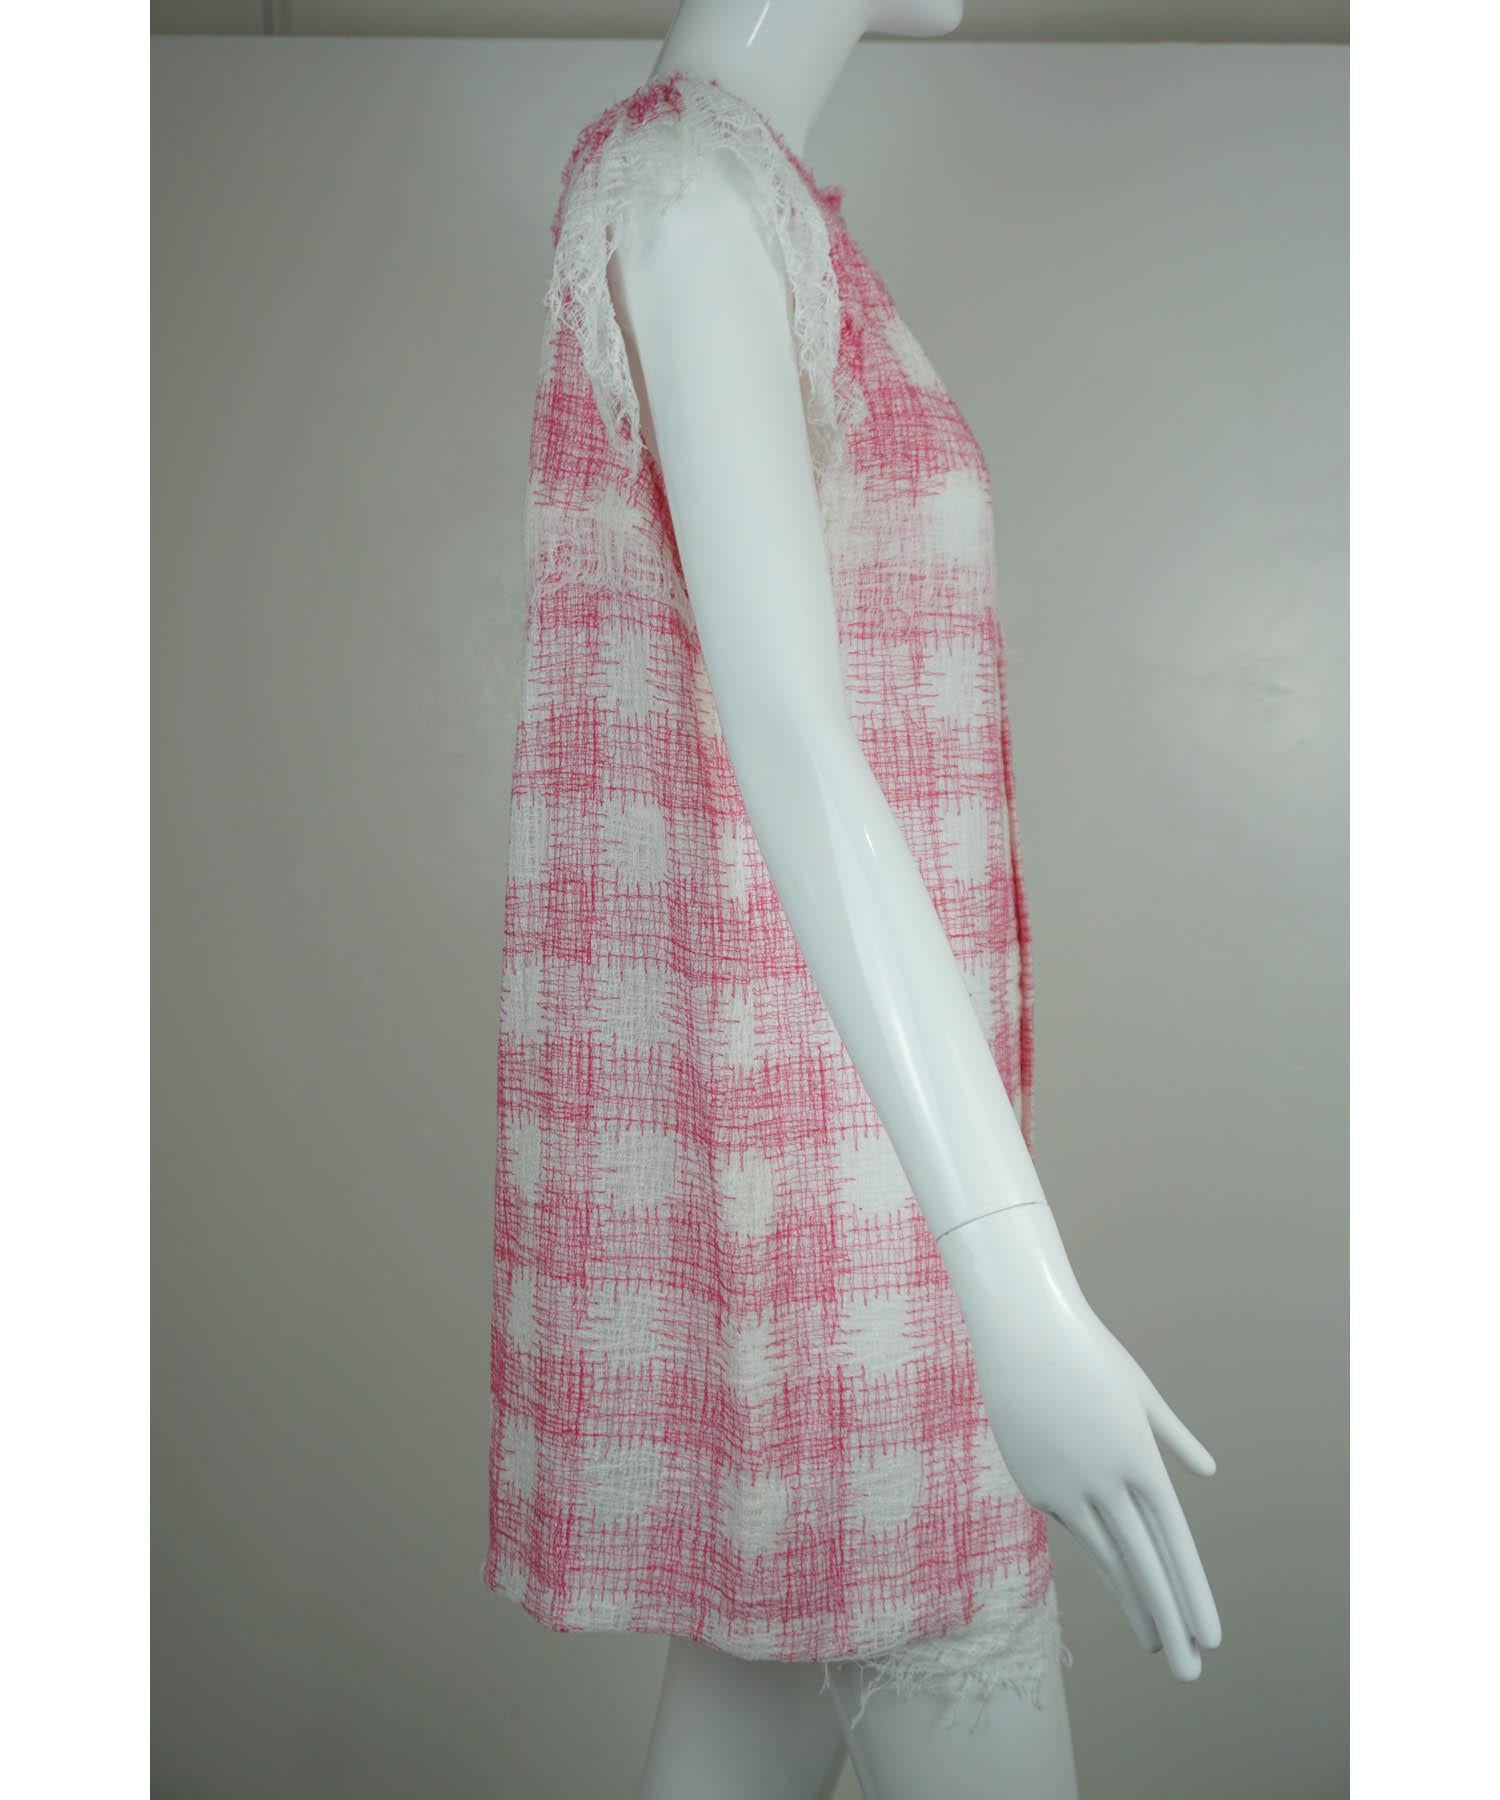 Chanel Gingham Tweed Sheath Dress 42/10 2011 For Sale 1